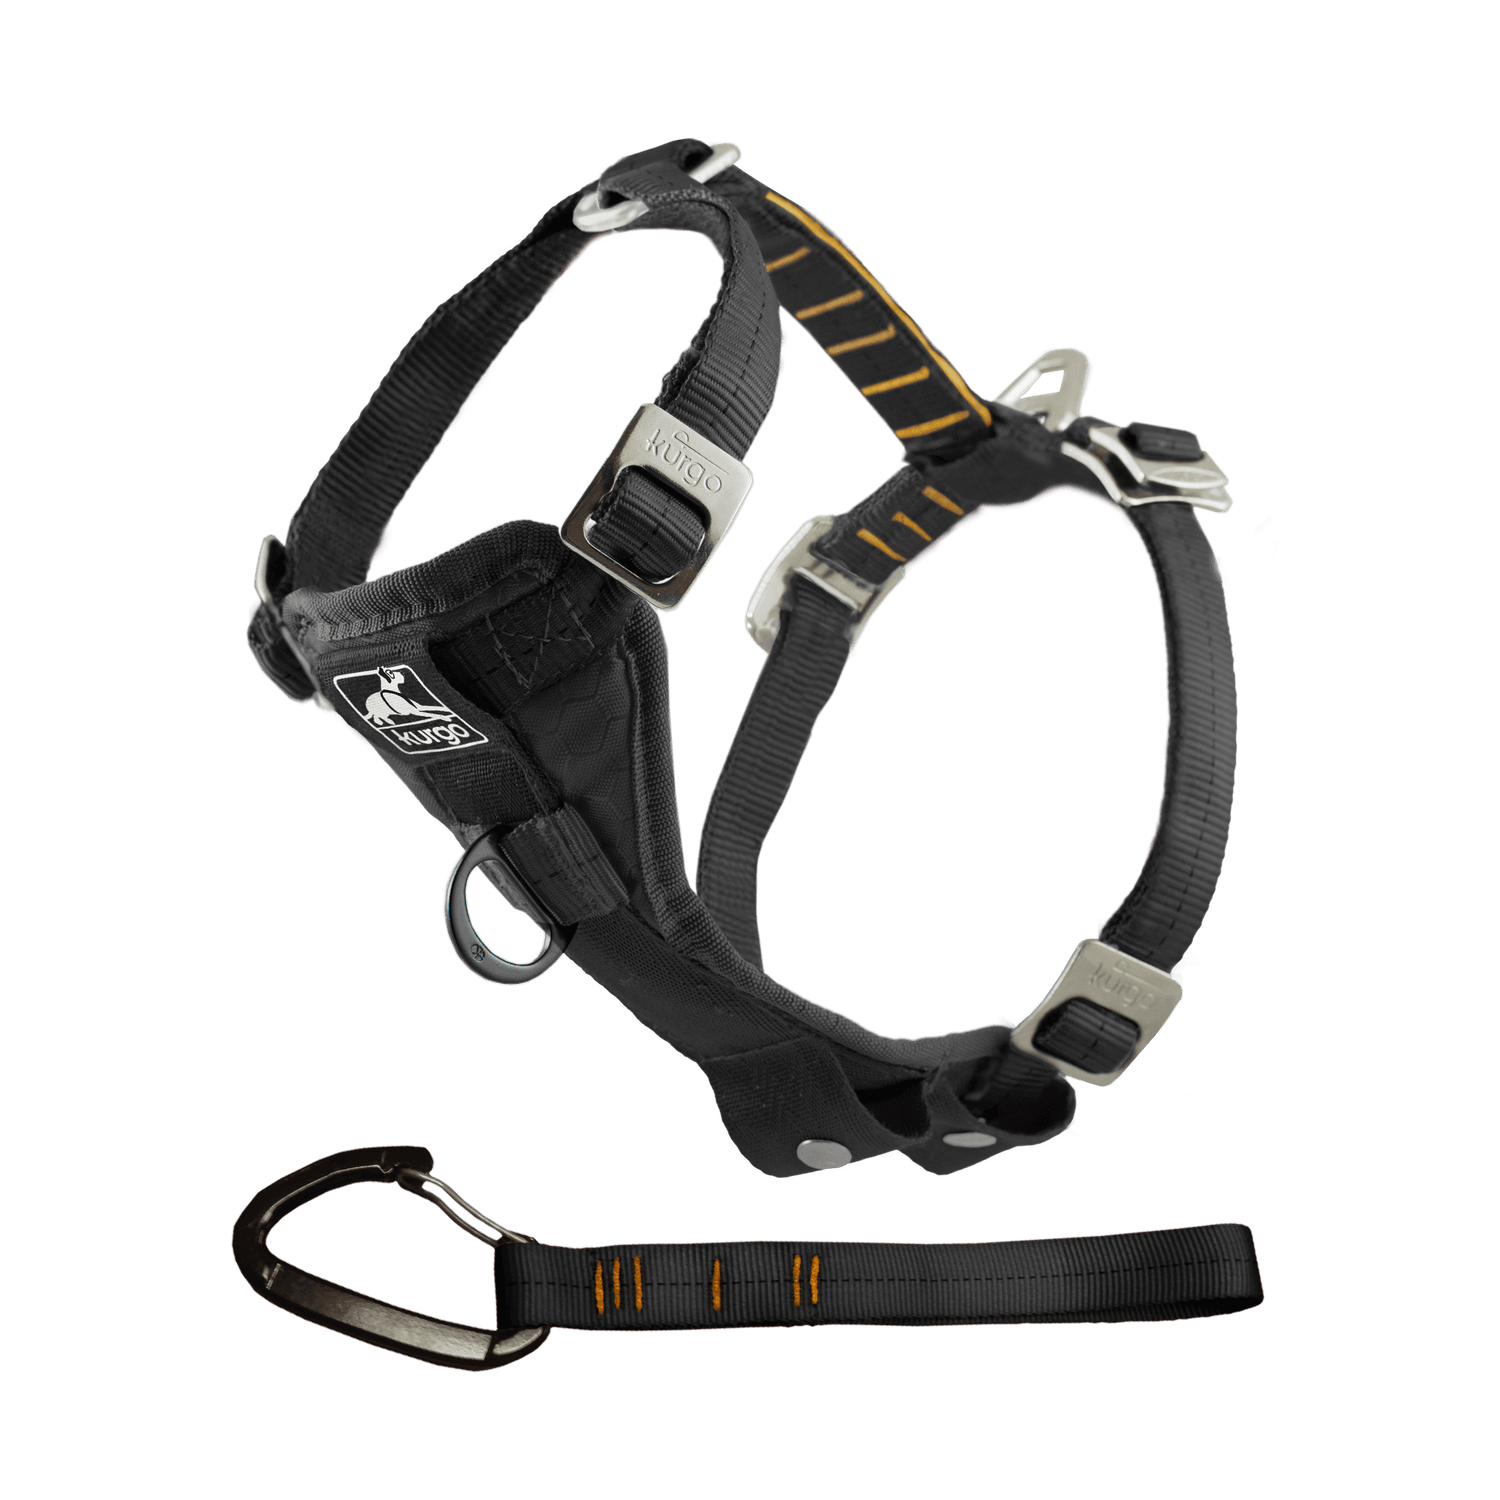 Kurgo Enhanced Strength Tru-Fit Smart Harness - Black, Medium